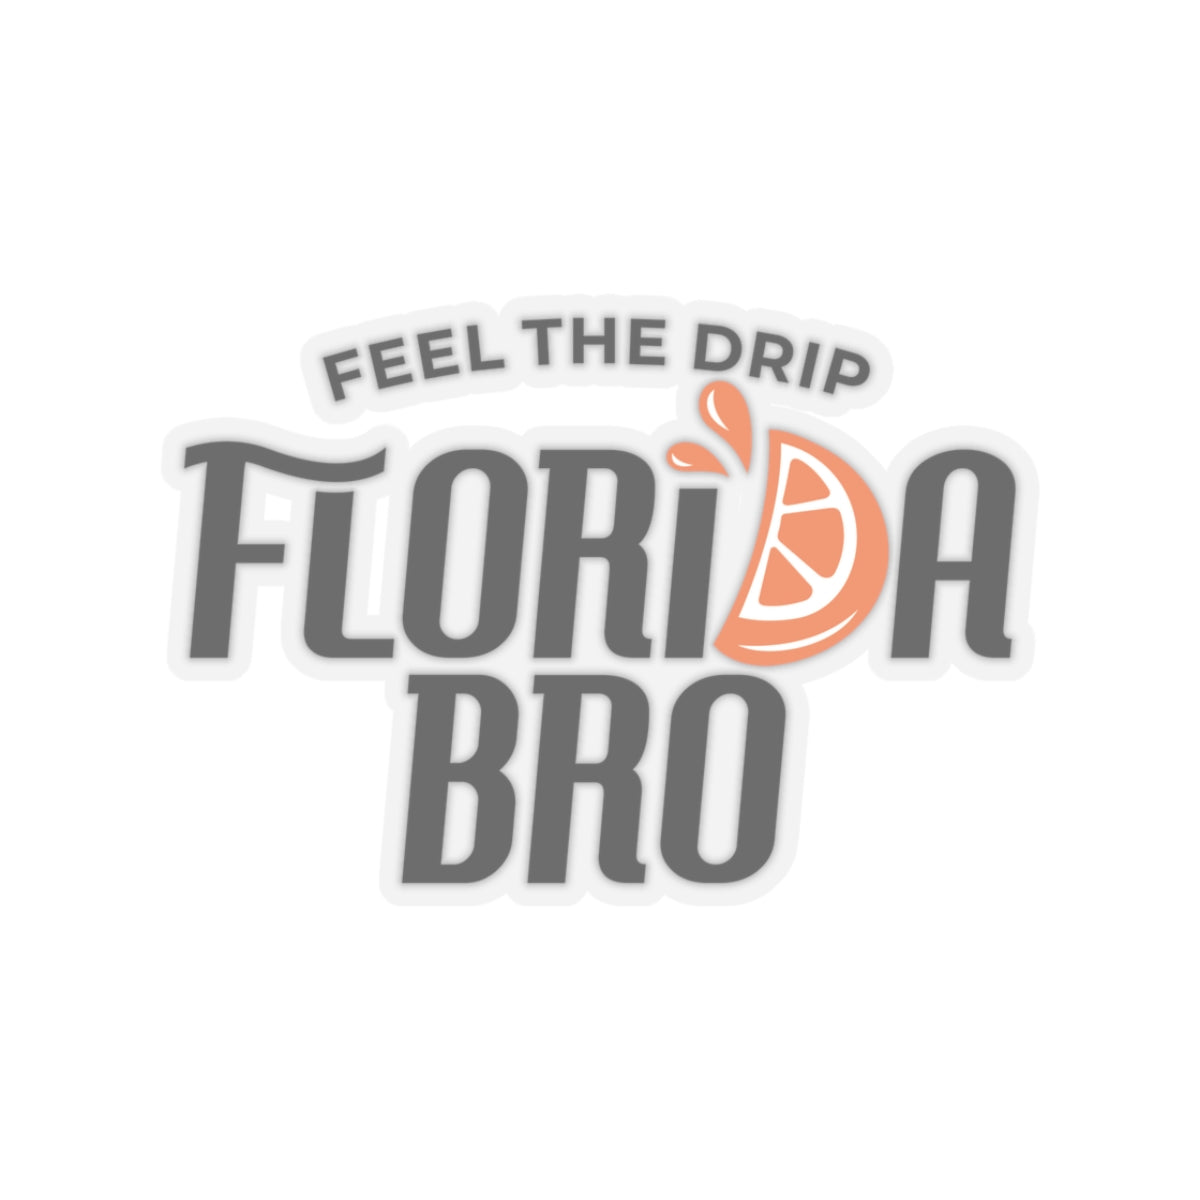 FLORIDA BRO - Florida Sticker - Size 3" x 3"